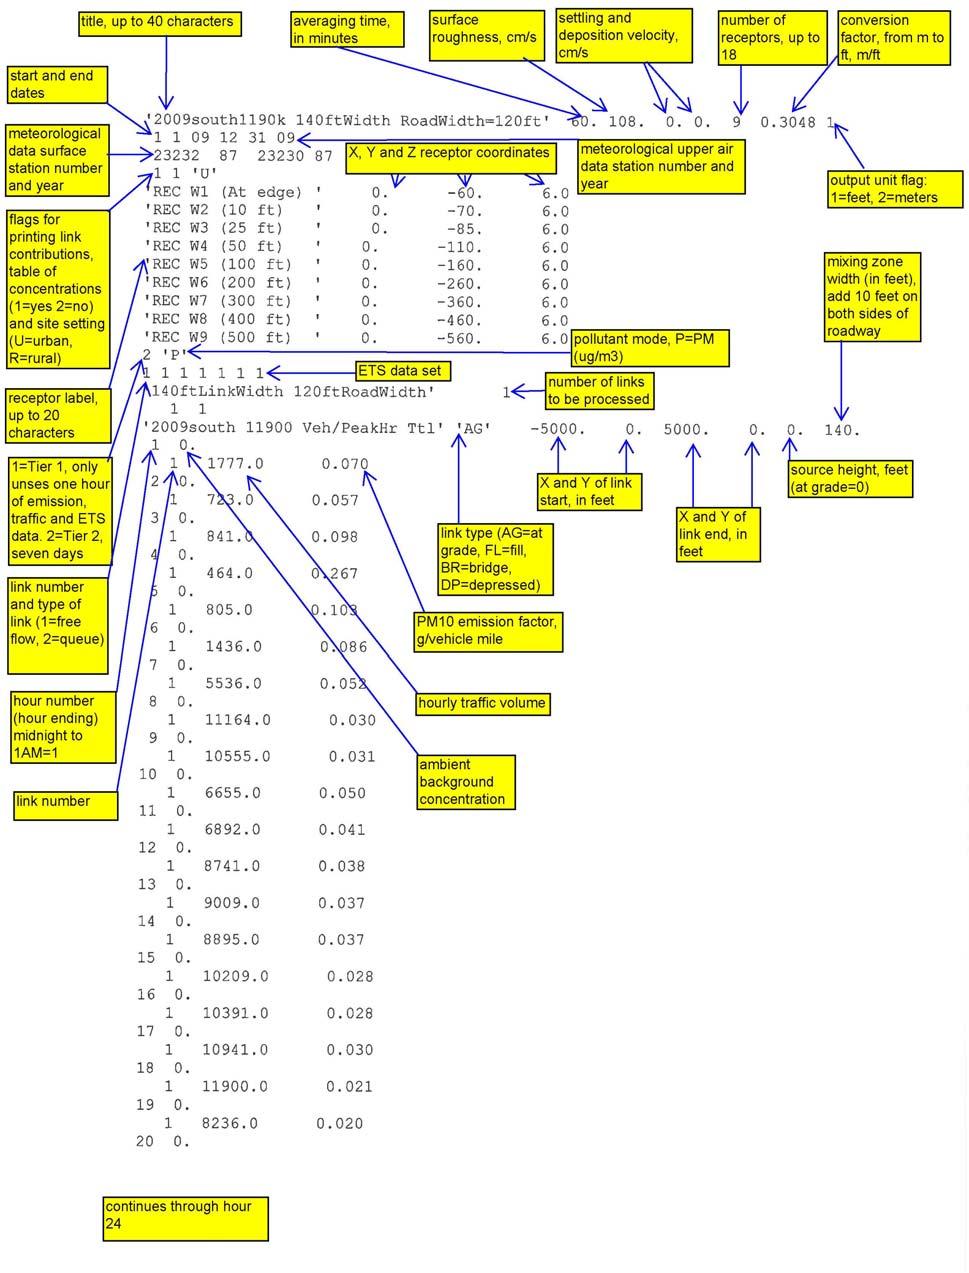 Figure 8: Example Scenario Input File and